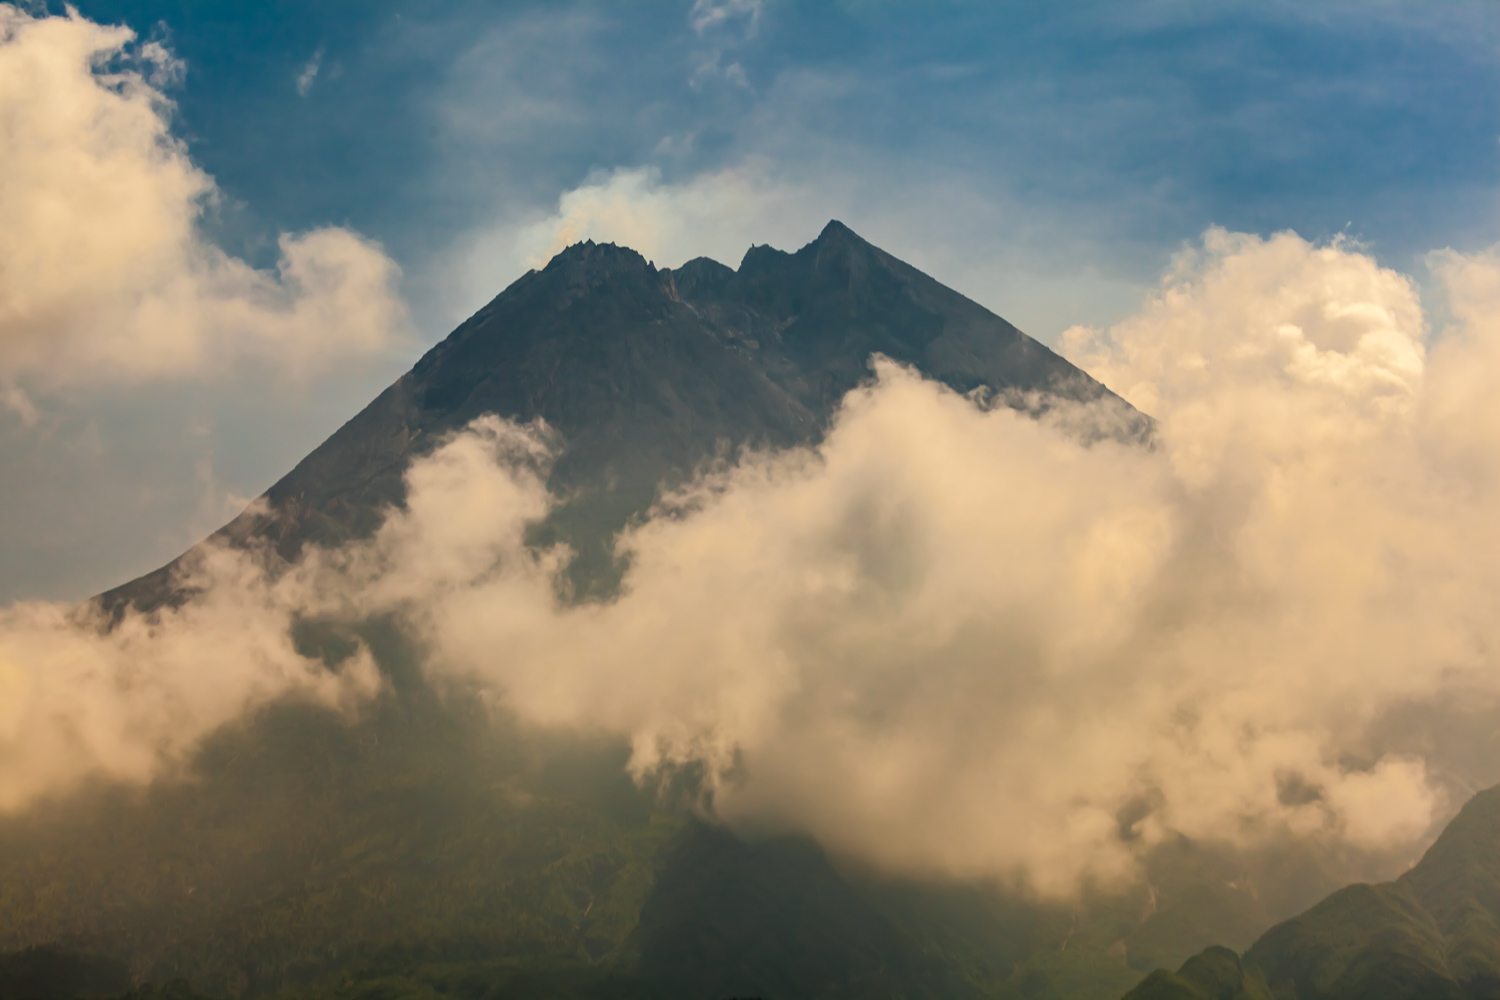 Mount Merapi the mythical volcano